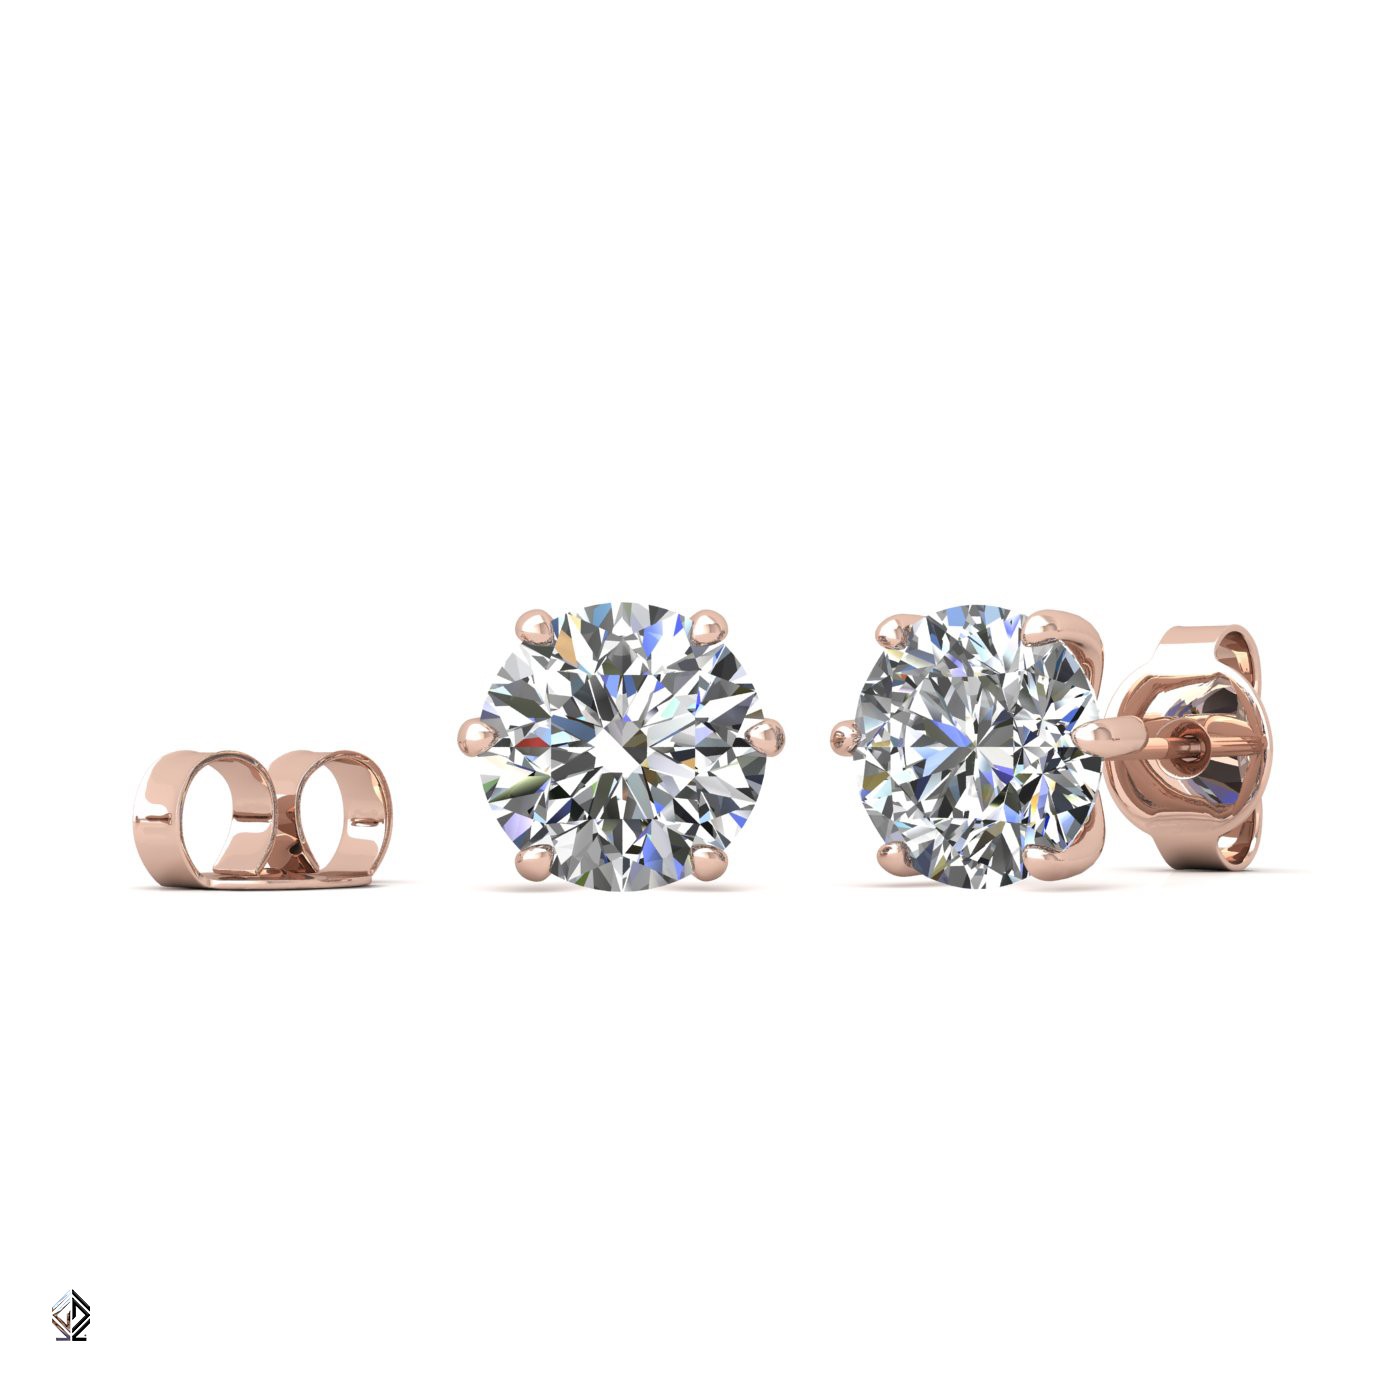 18k rose gold 0,7 ct each (1,4 tcw) 6 prongs round shape diamond earrings